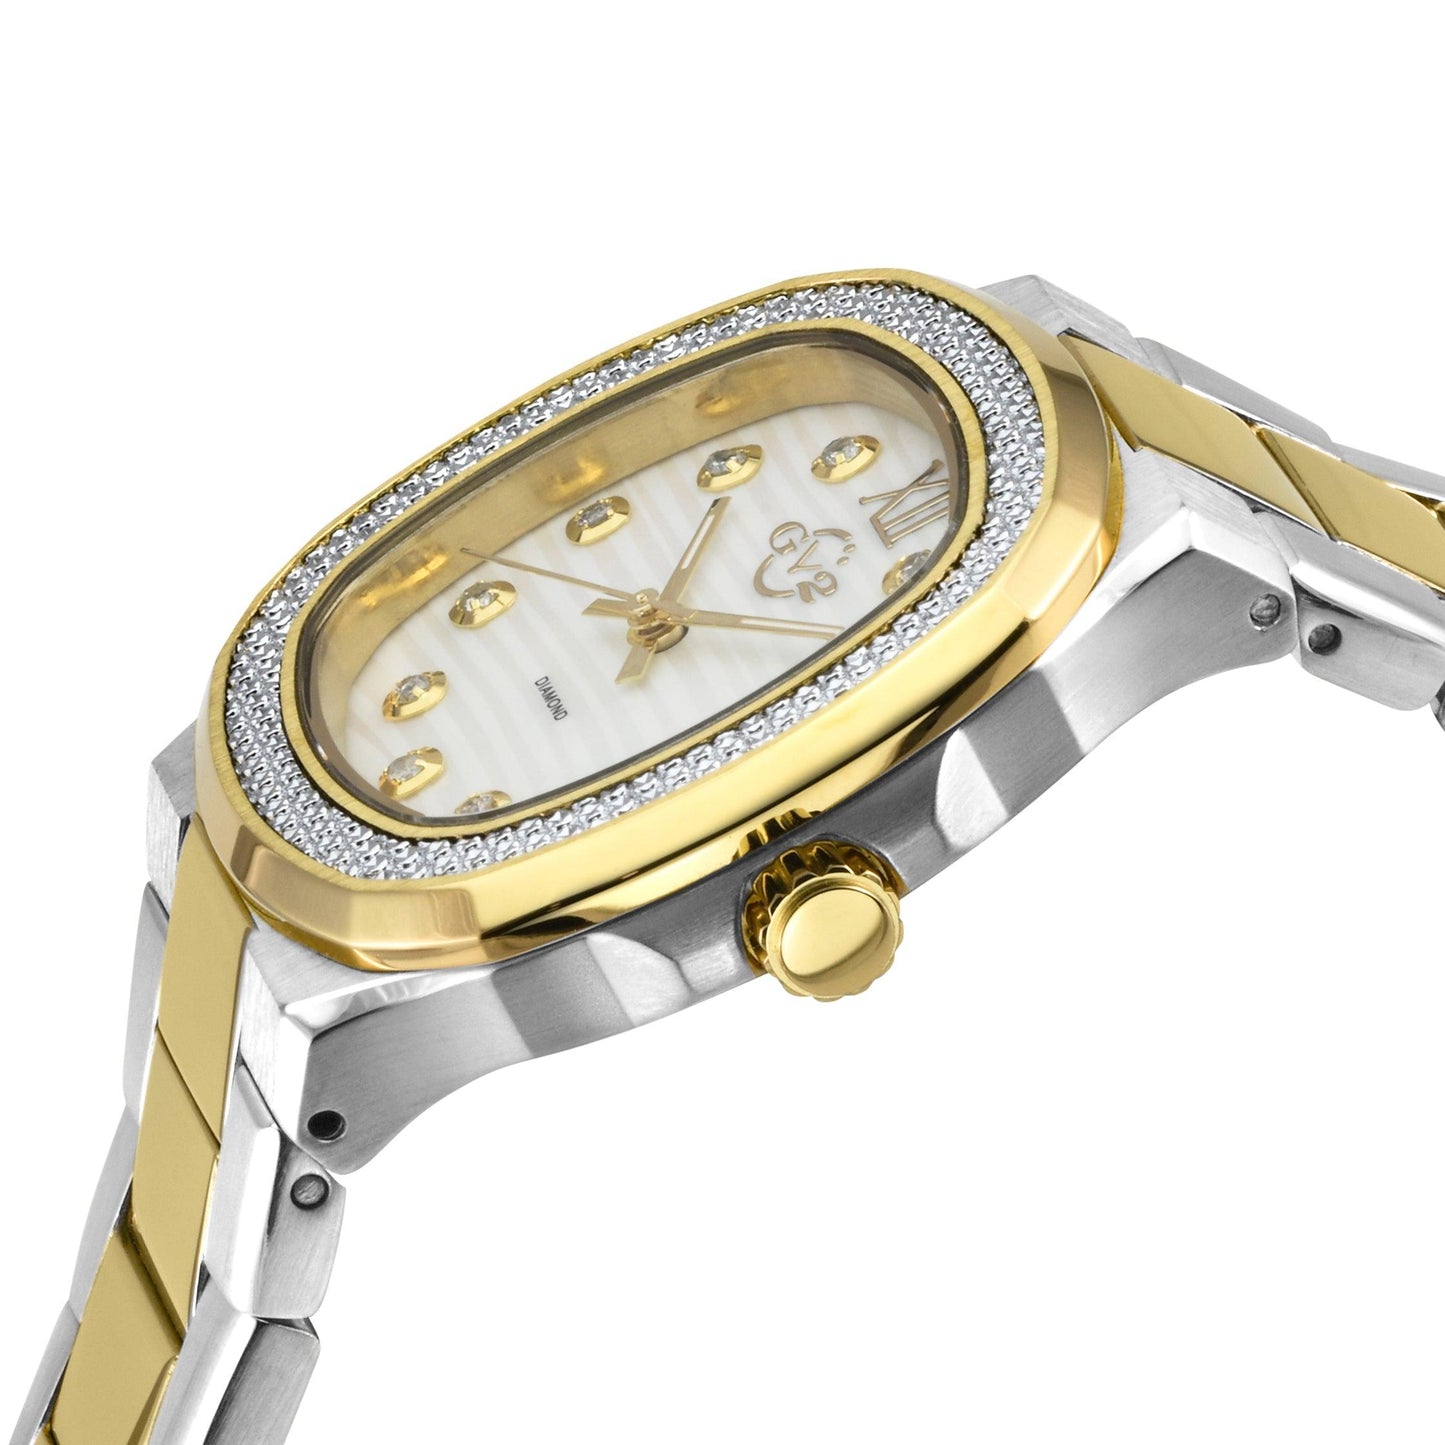 Gevril-Luxury-Swiss-Watches-GV2 Potente Diamond-18203B